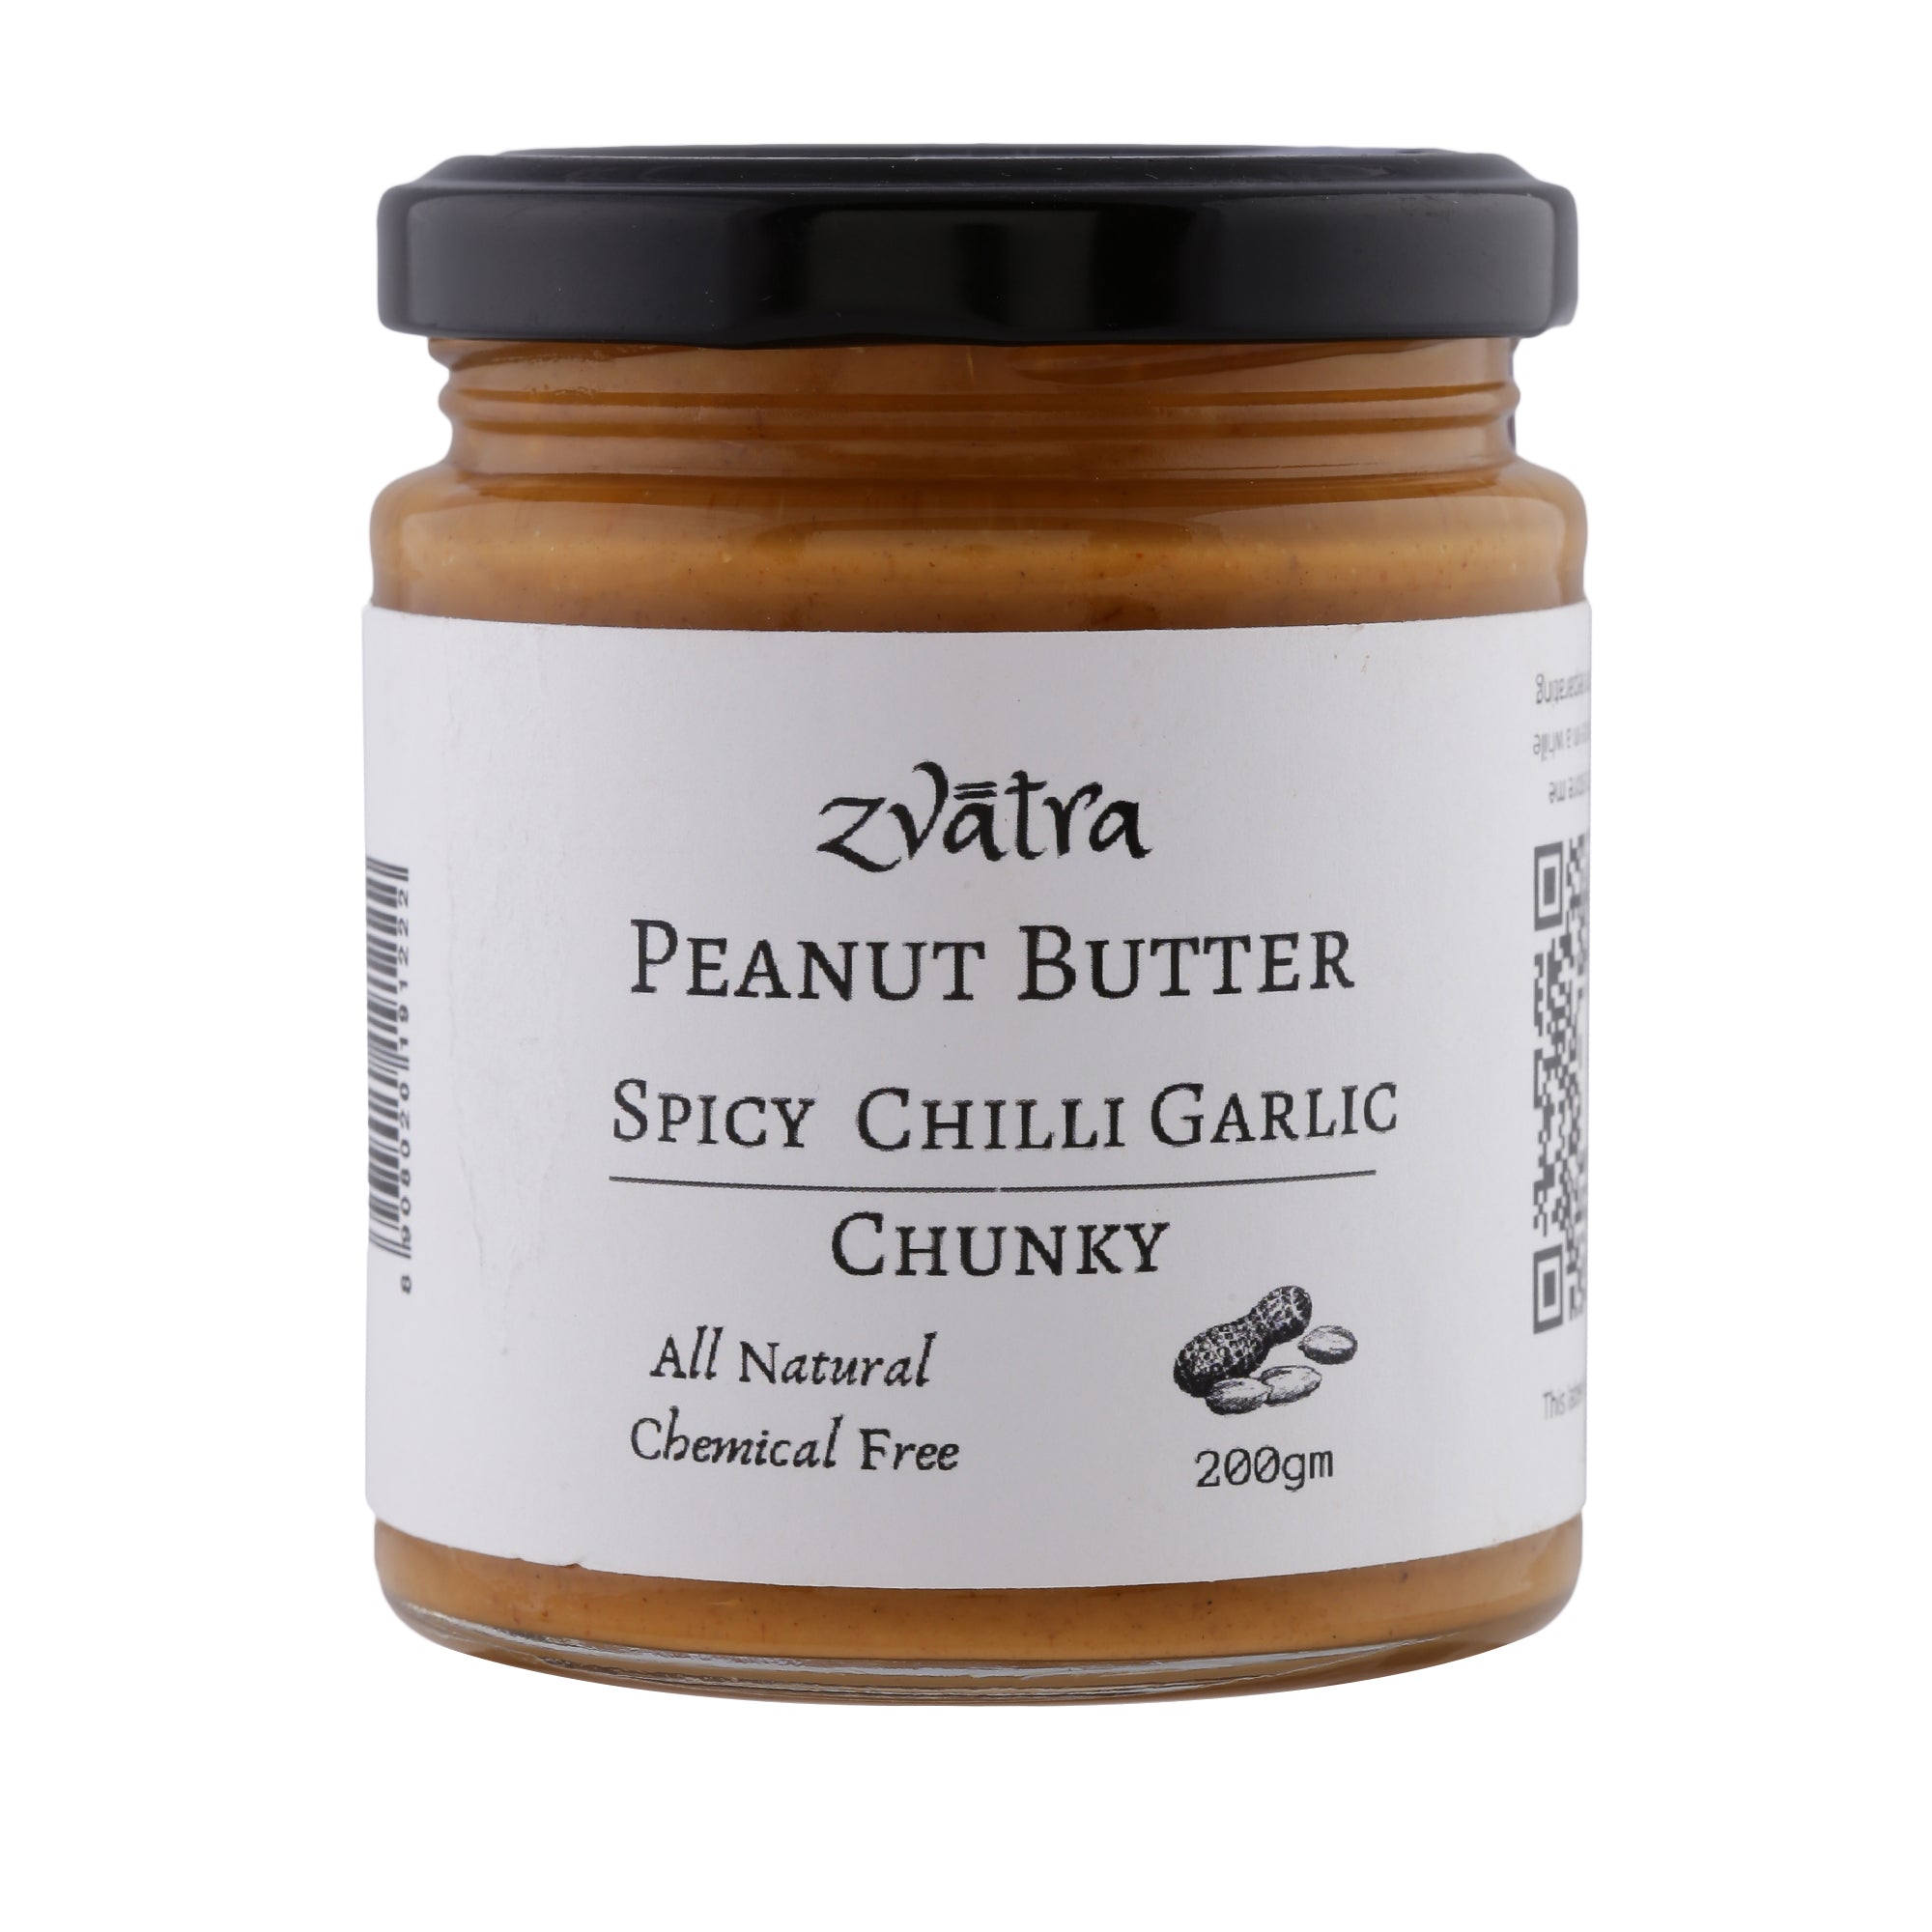 Peanut Butter - Spicy Chilli Garlic - Chunky